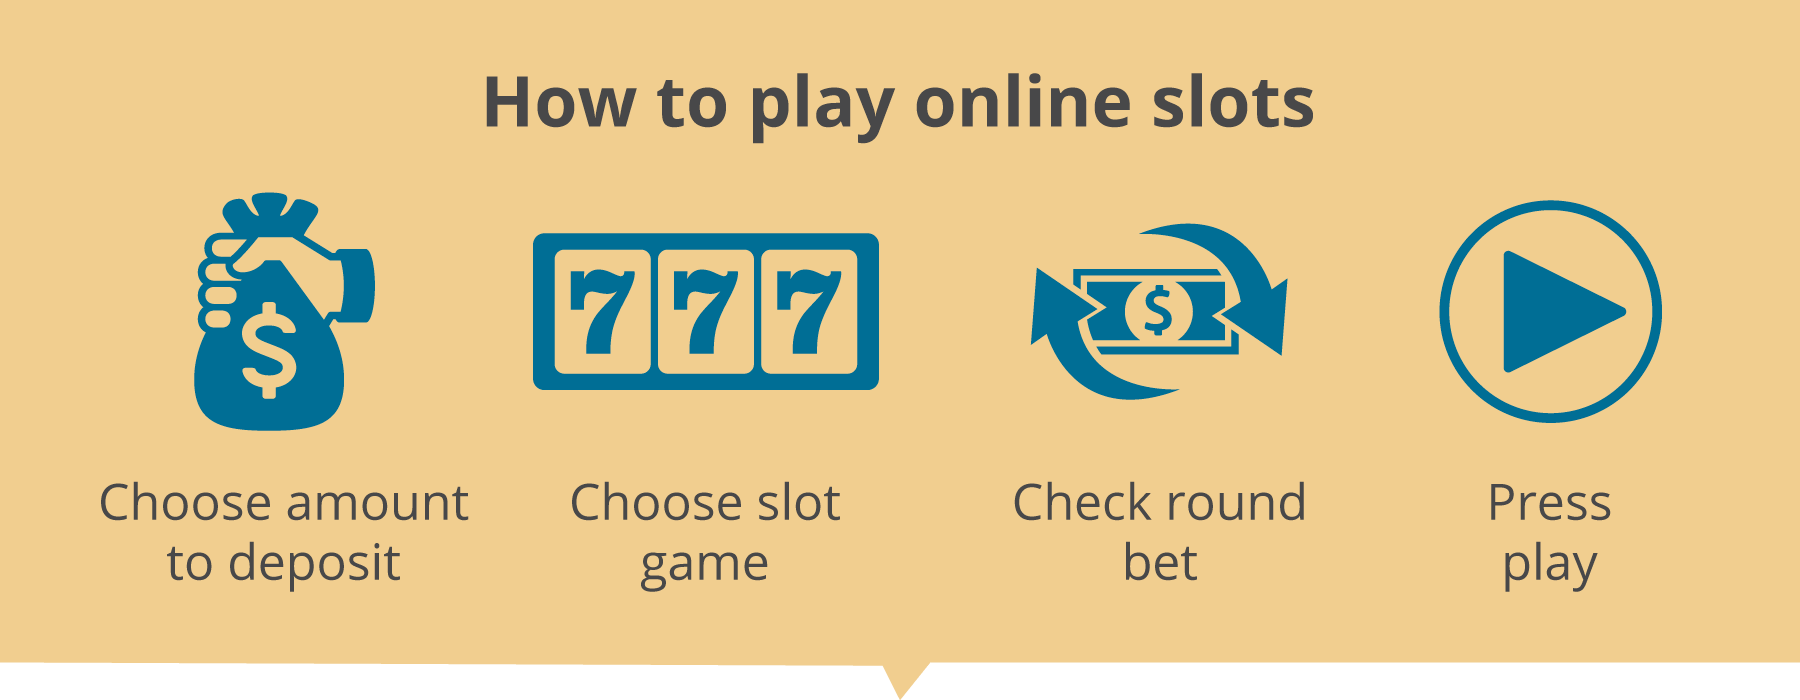 How to play Online Slots UAE - Emirates Casino Slot Guide - UAE Slots - UAE Casinos 